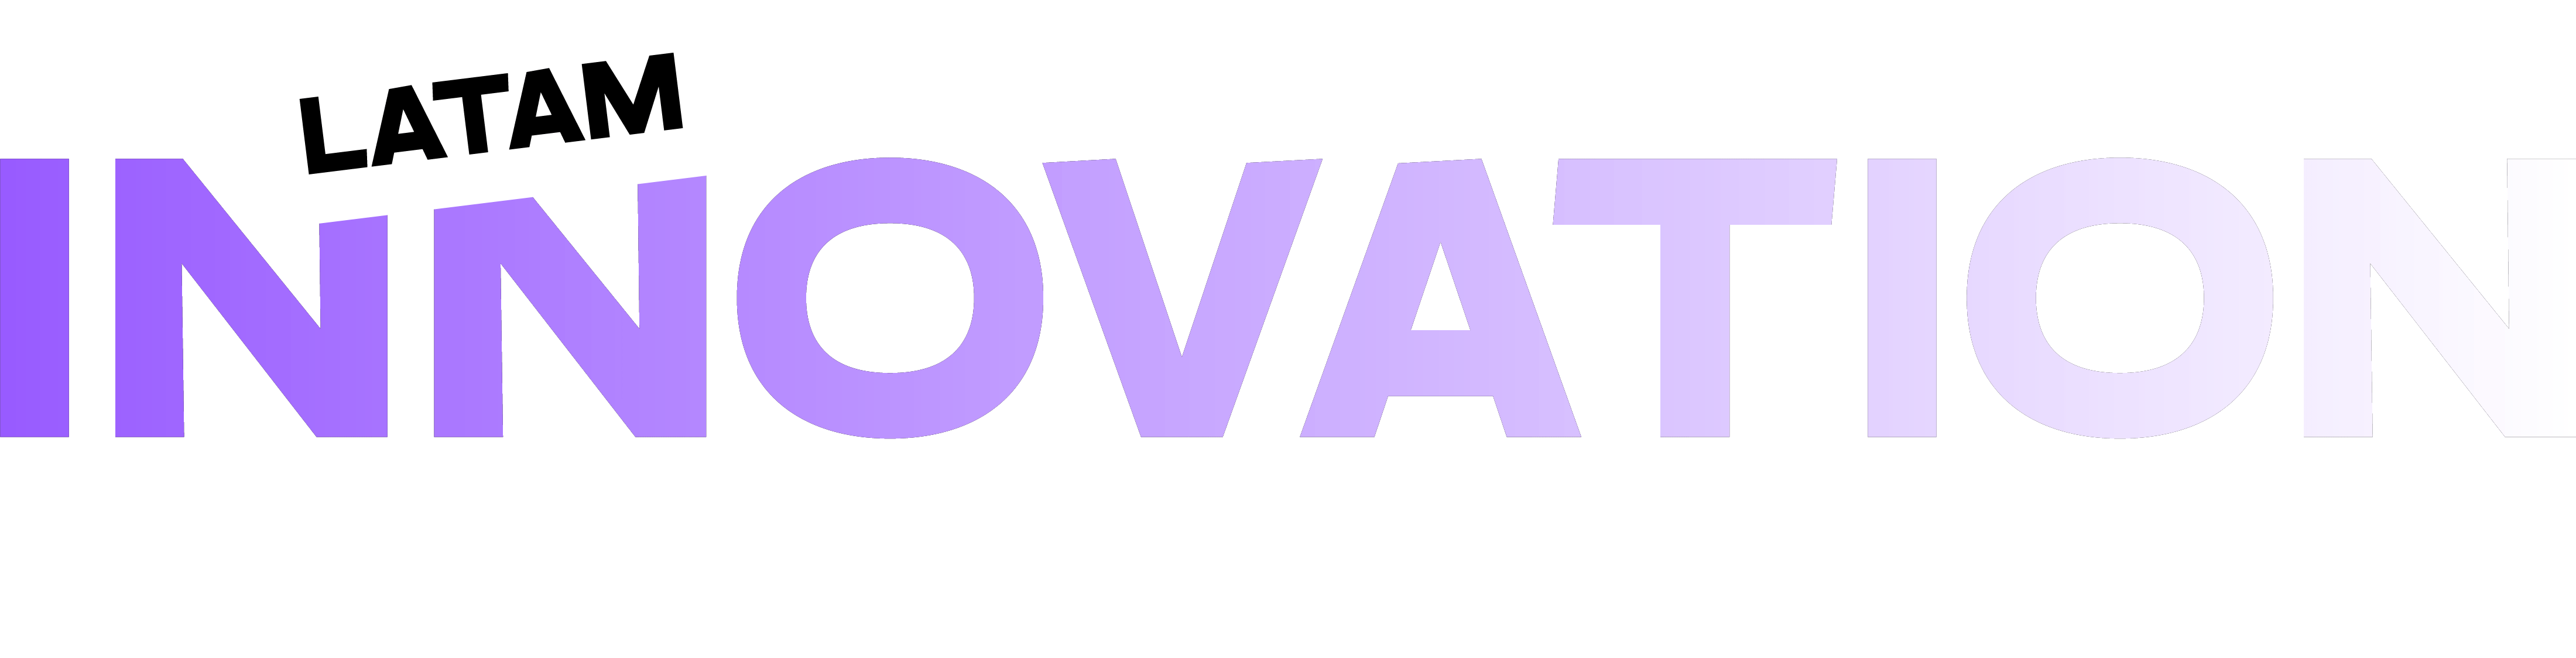 Latam Innovation Summit icon